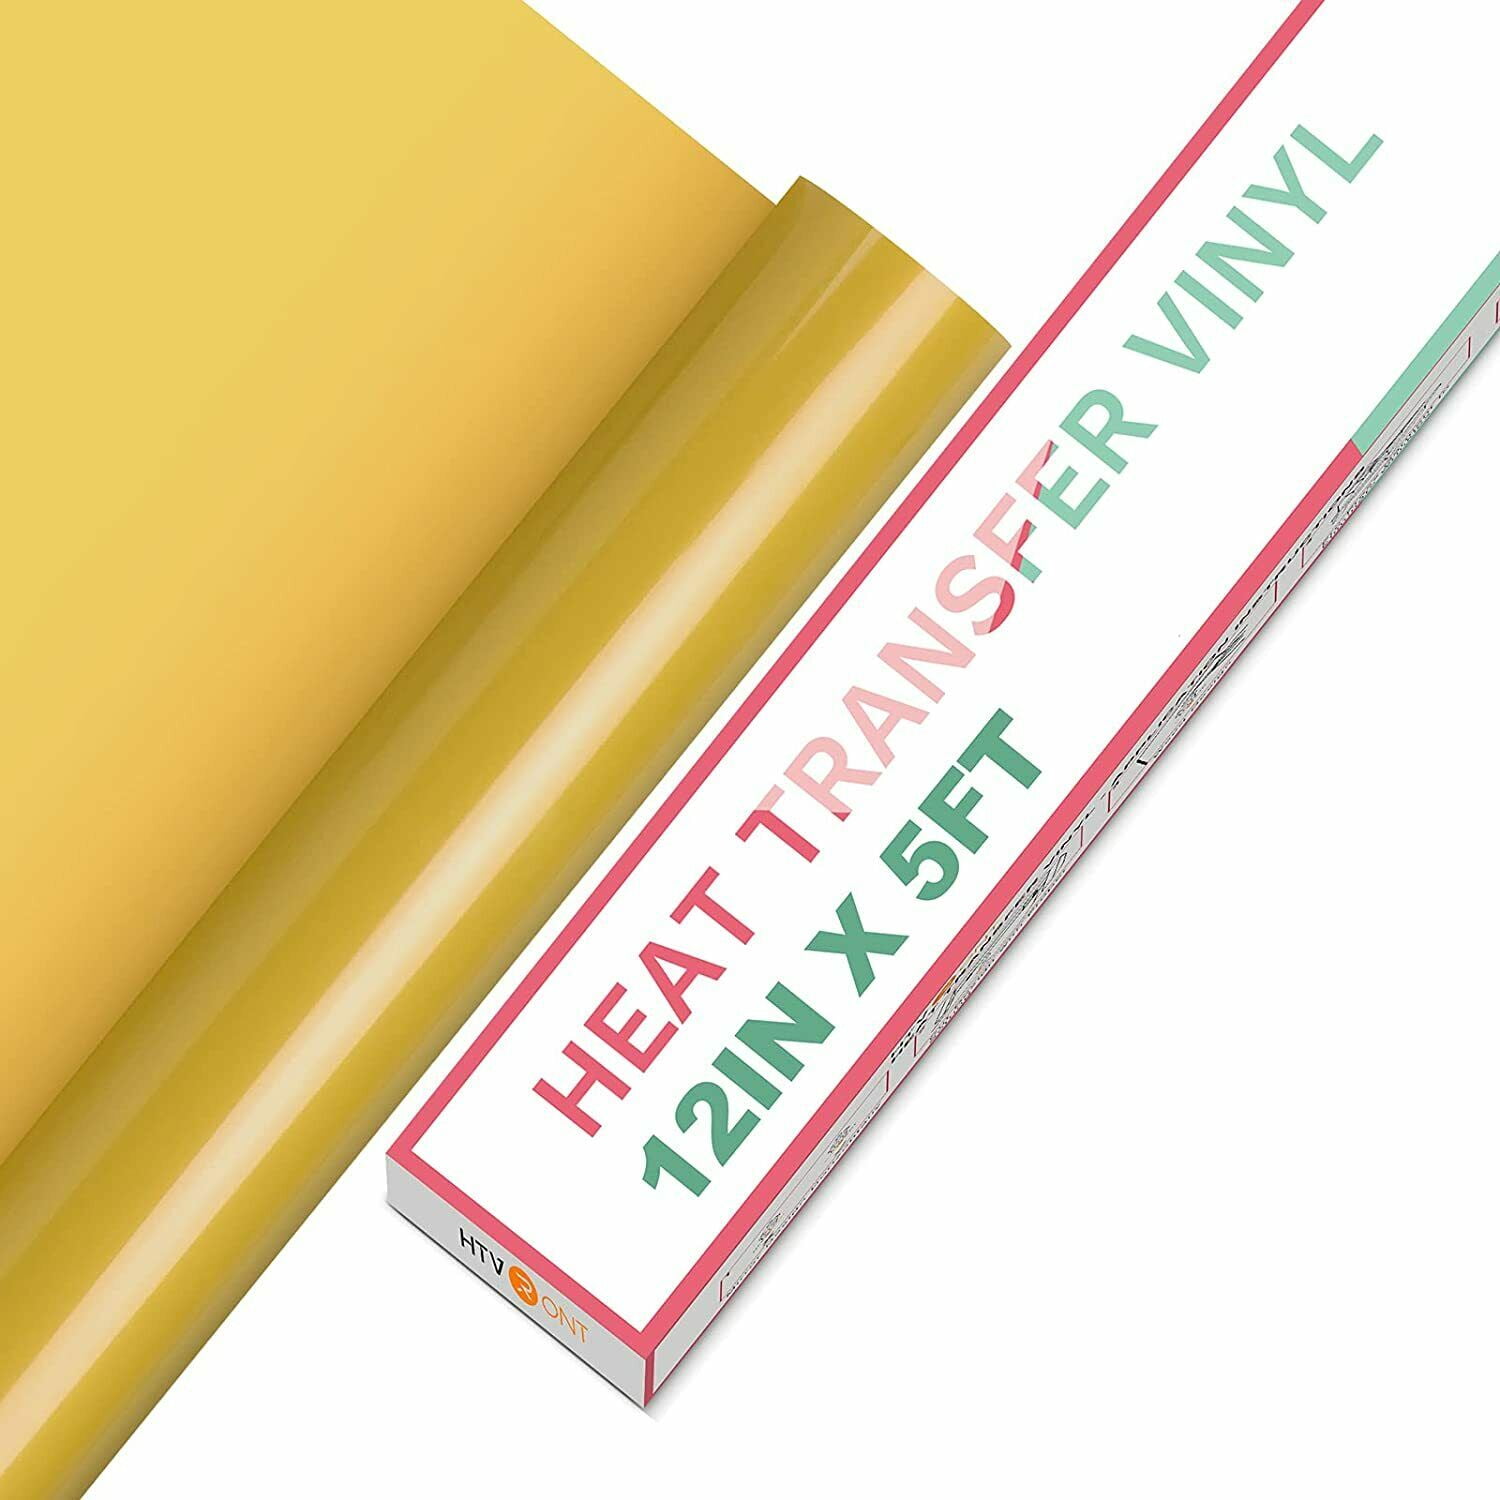 Reflective Heat Transfer Vinyl PU Glossy Rainbow Holographic Iron On HTV Roll for Fabric 12inch x 5 feet 